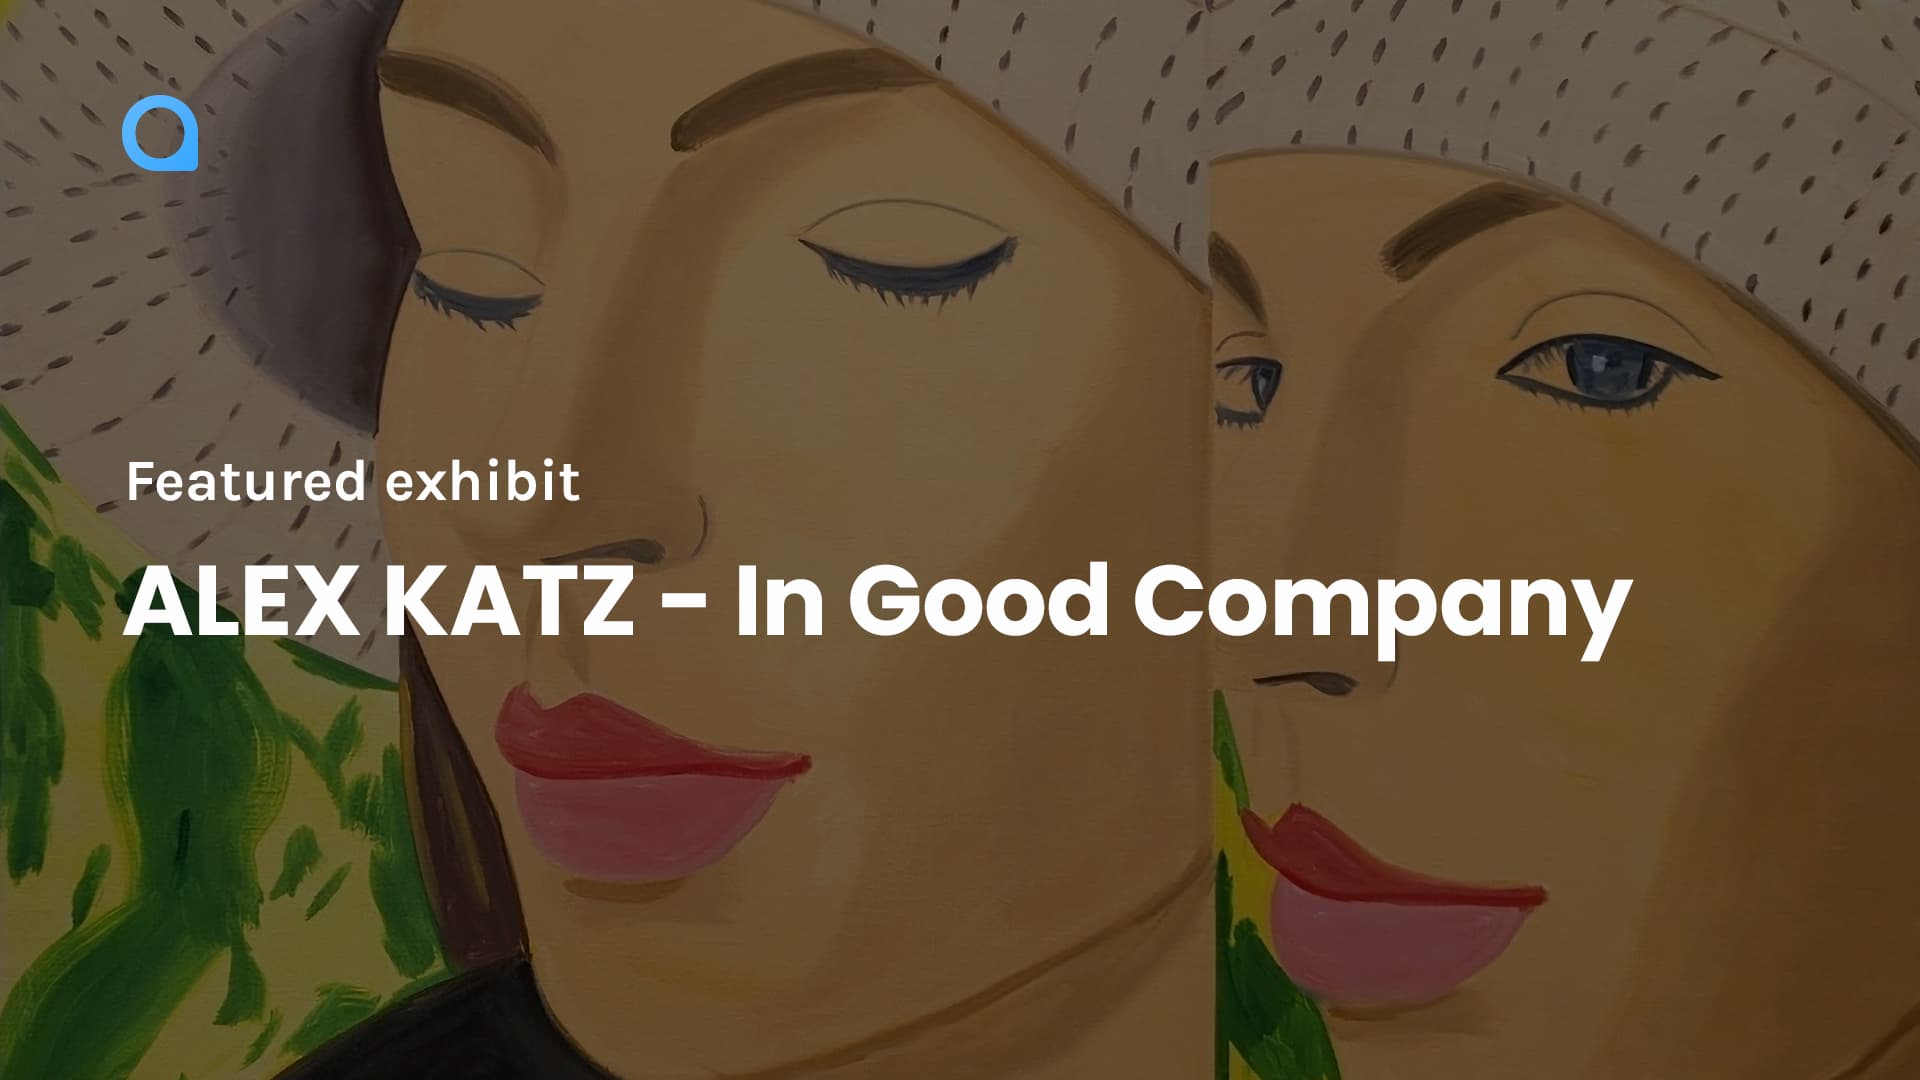 ALEX KATZ - In Good Company